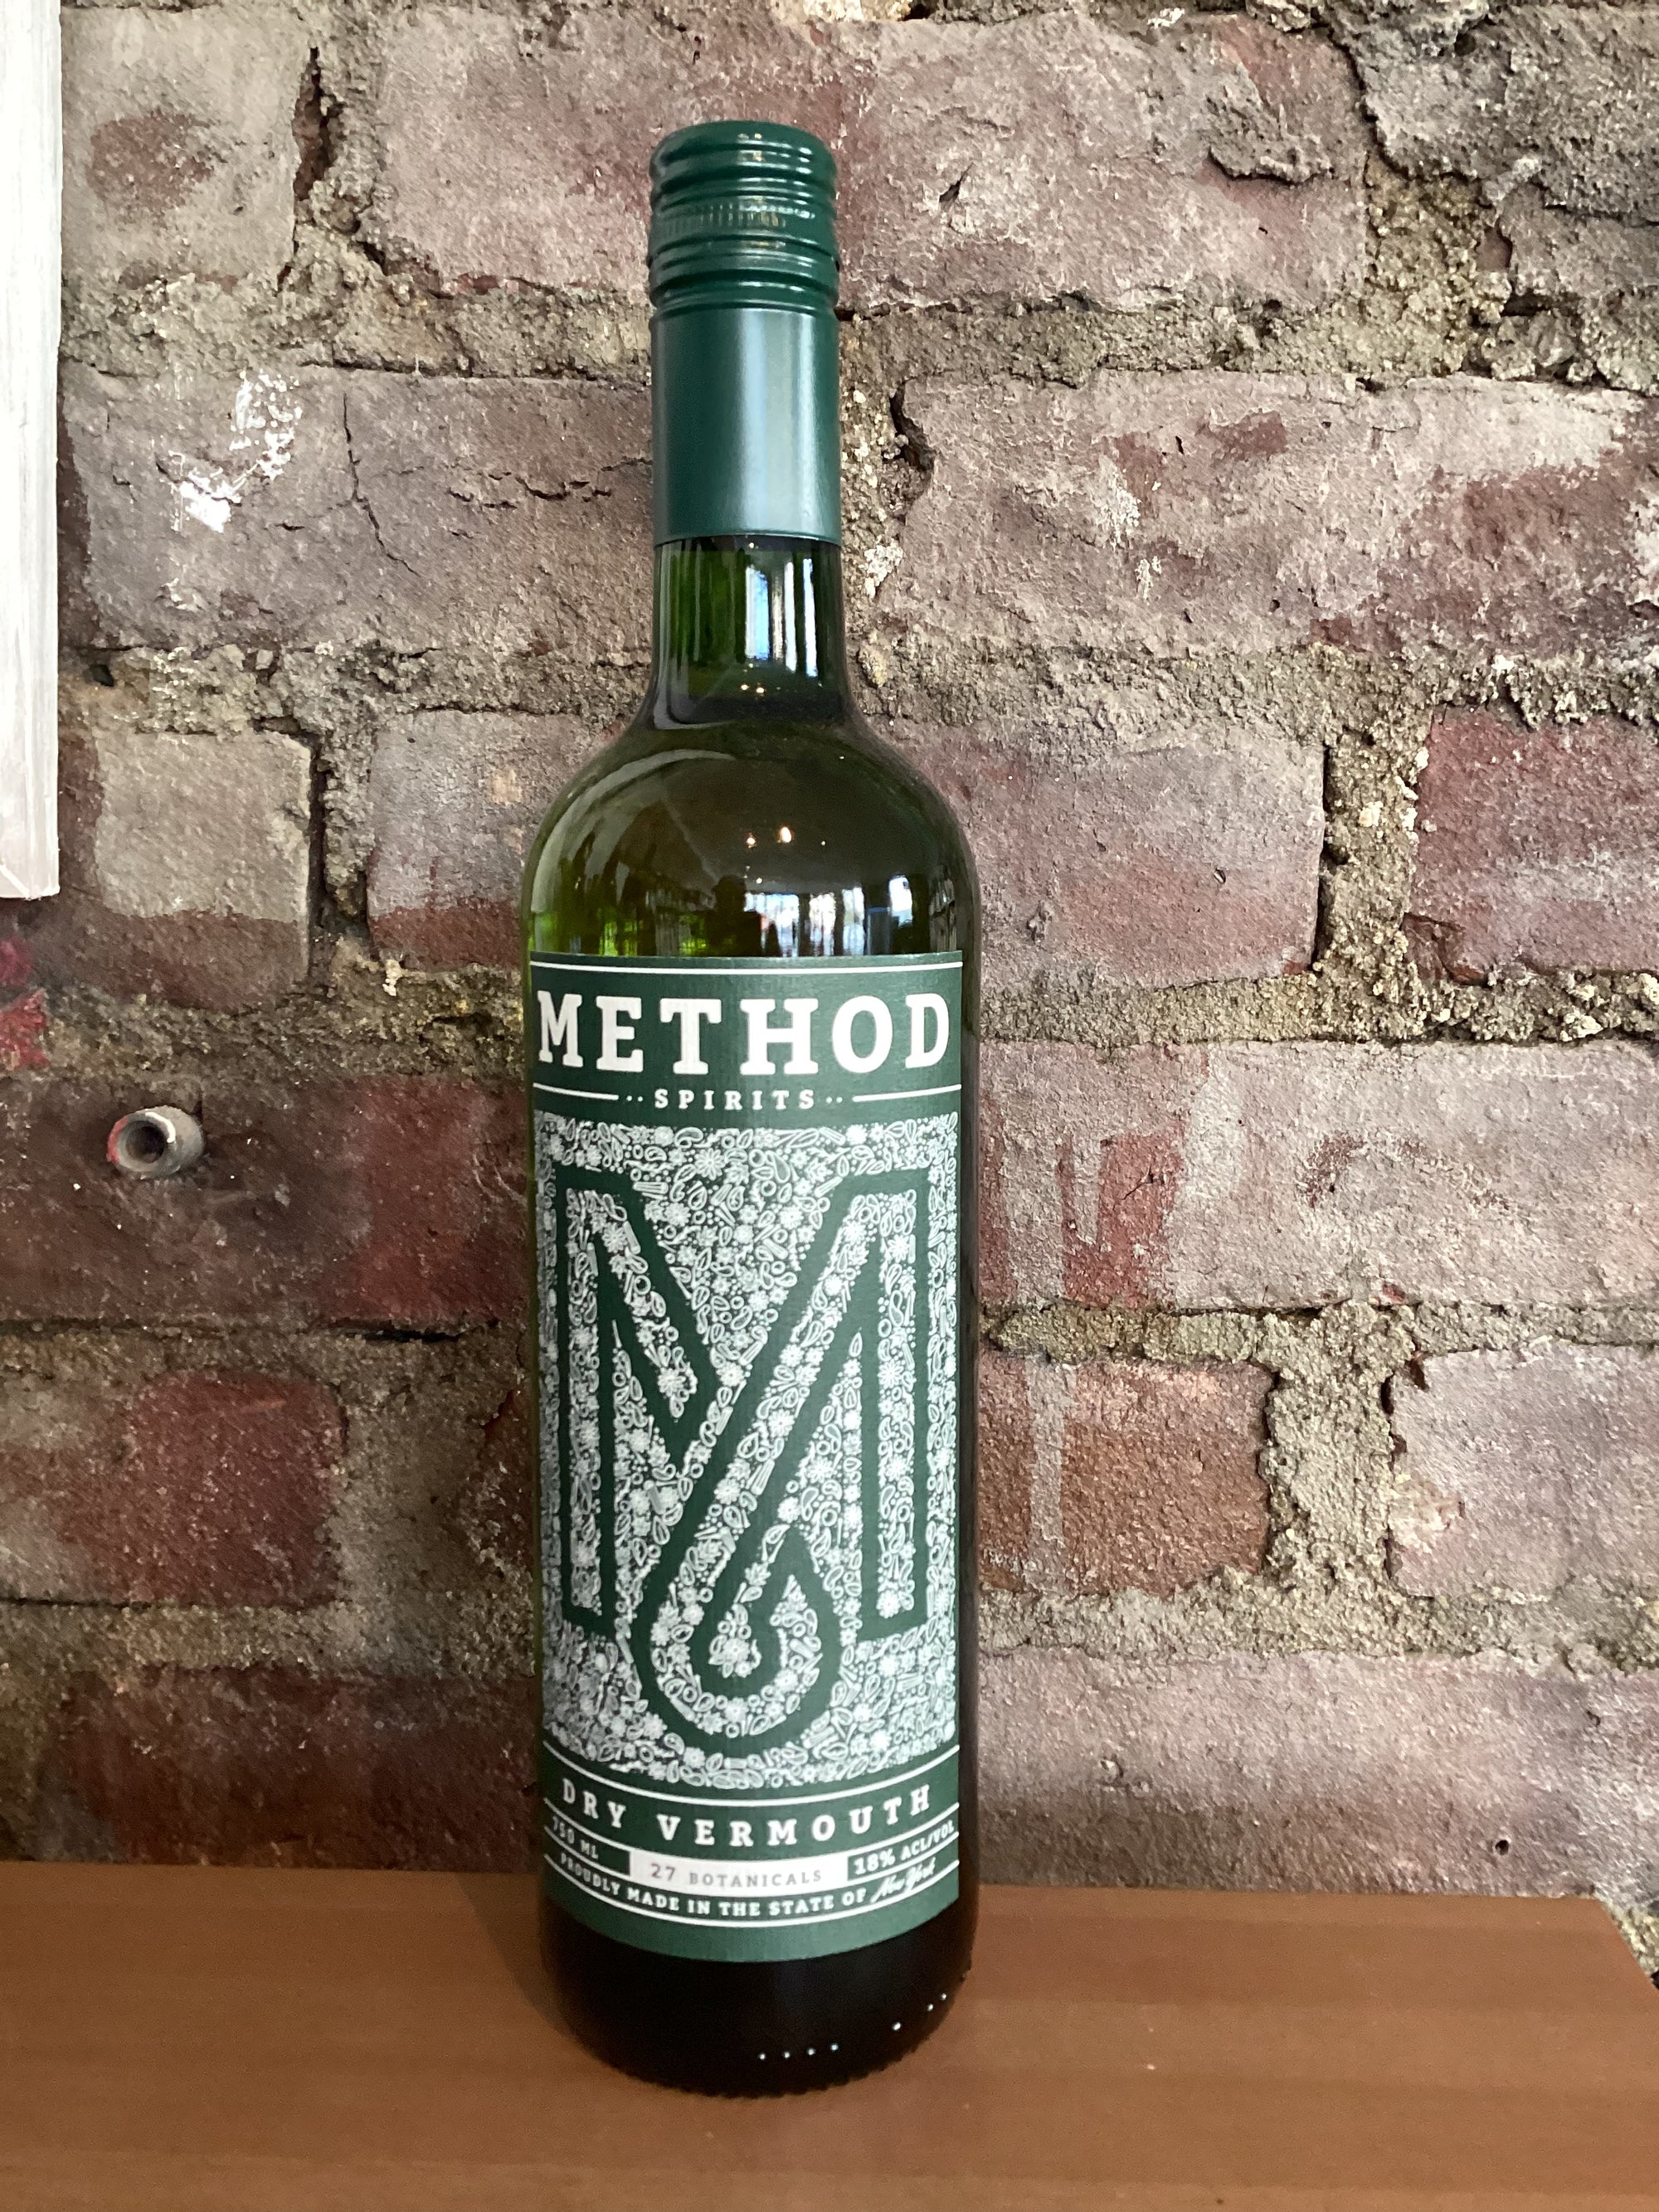 Method Spirits, Dry Vermouth (New York) 750ml